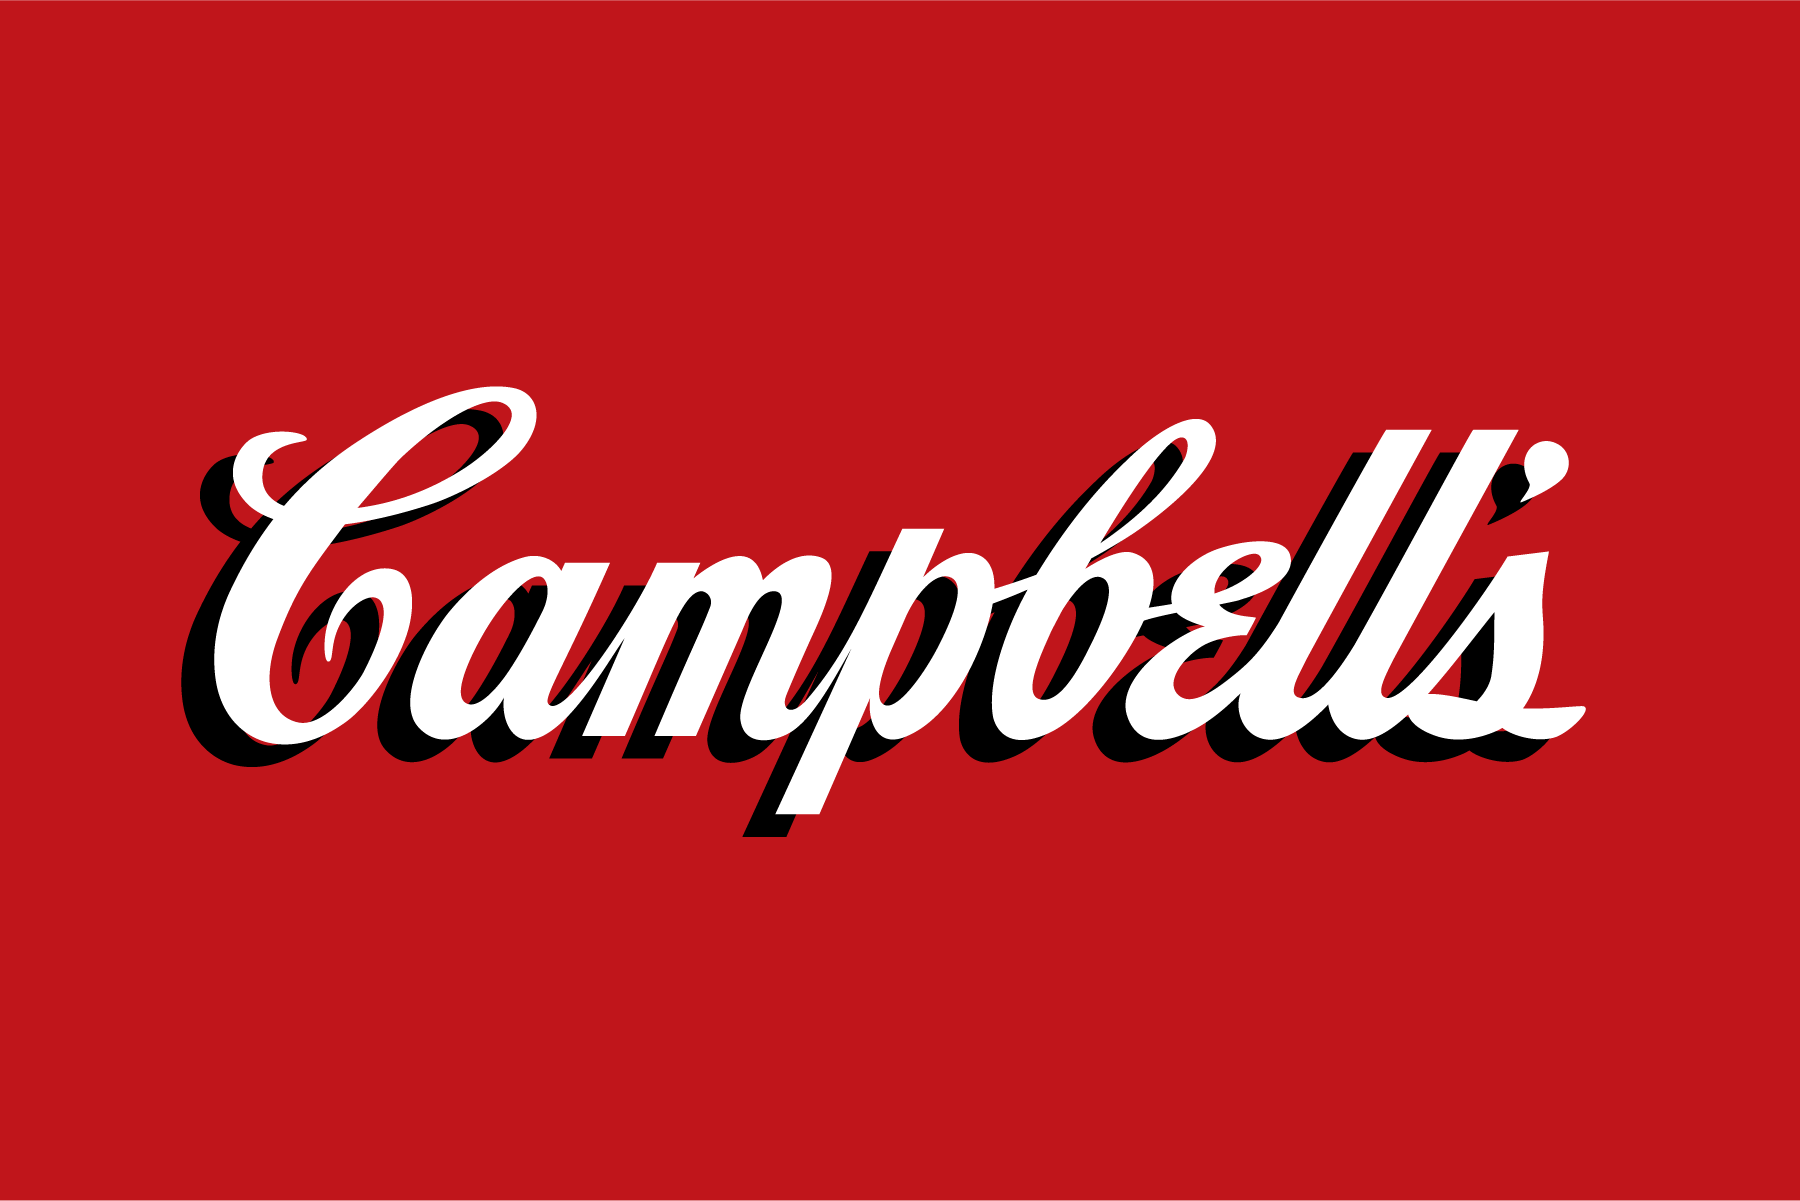 Campbell's Generation Gap